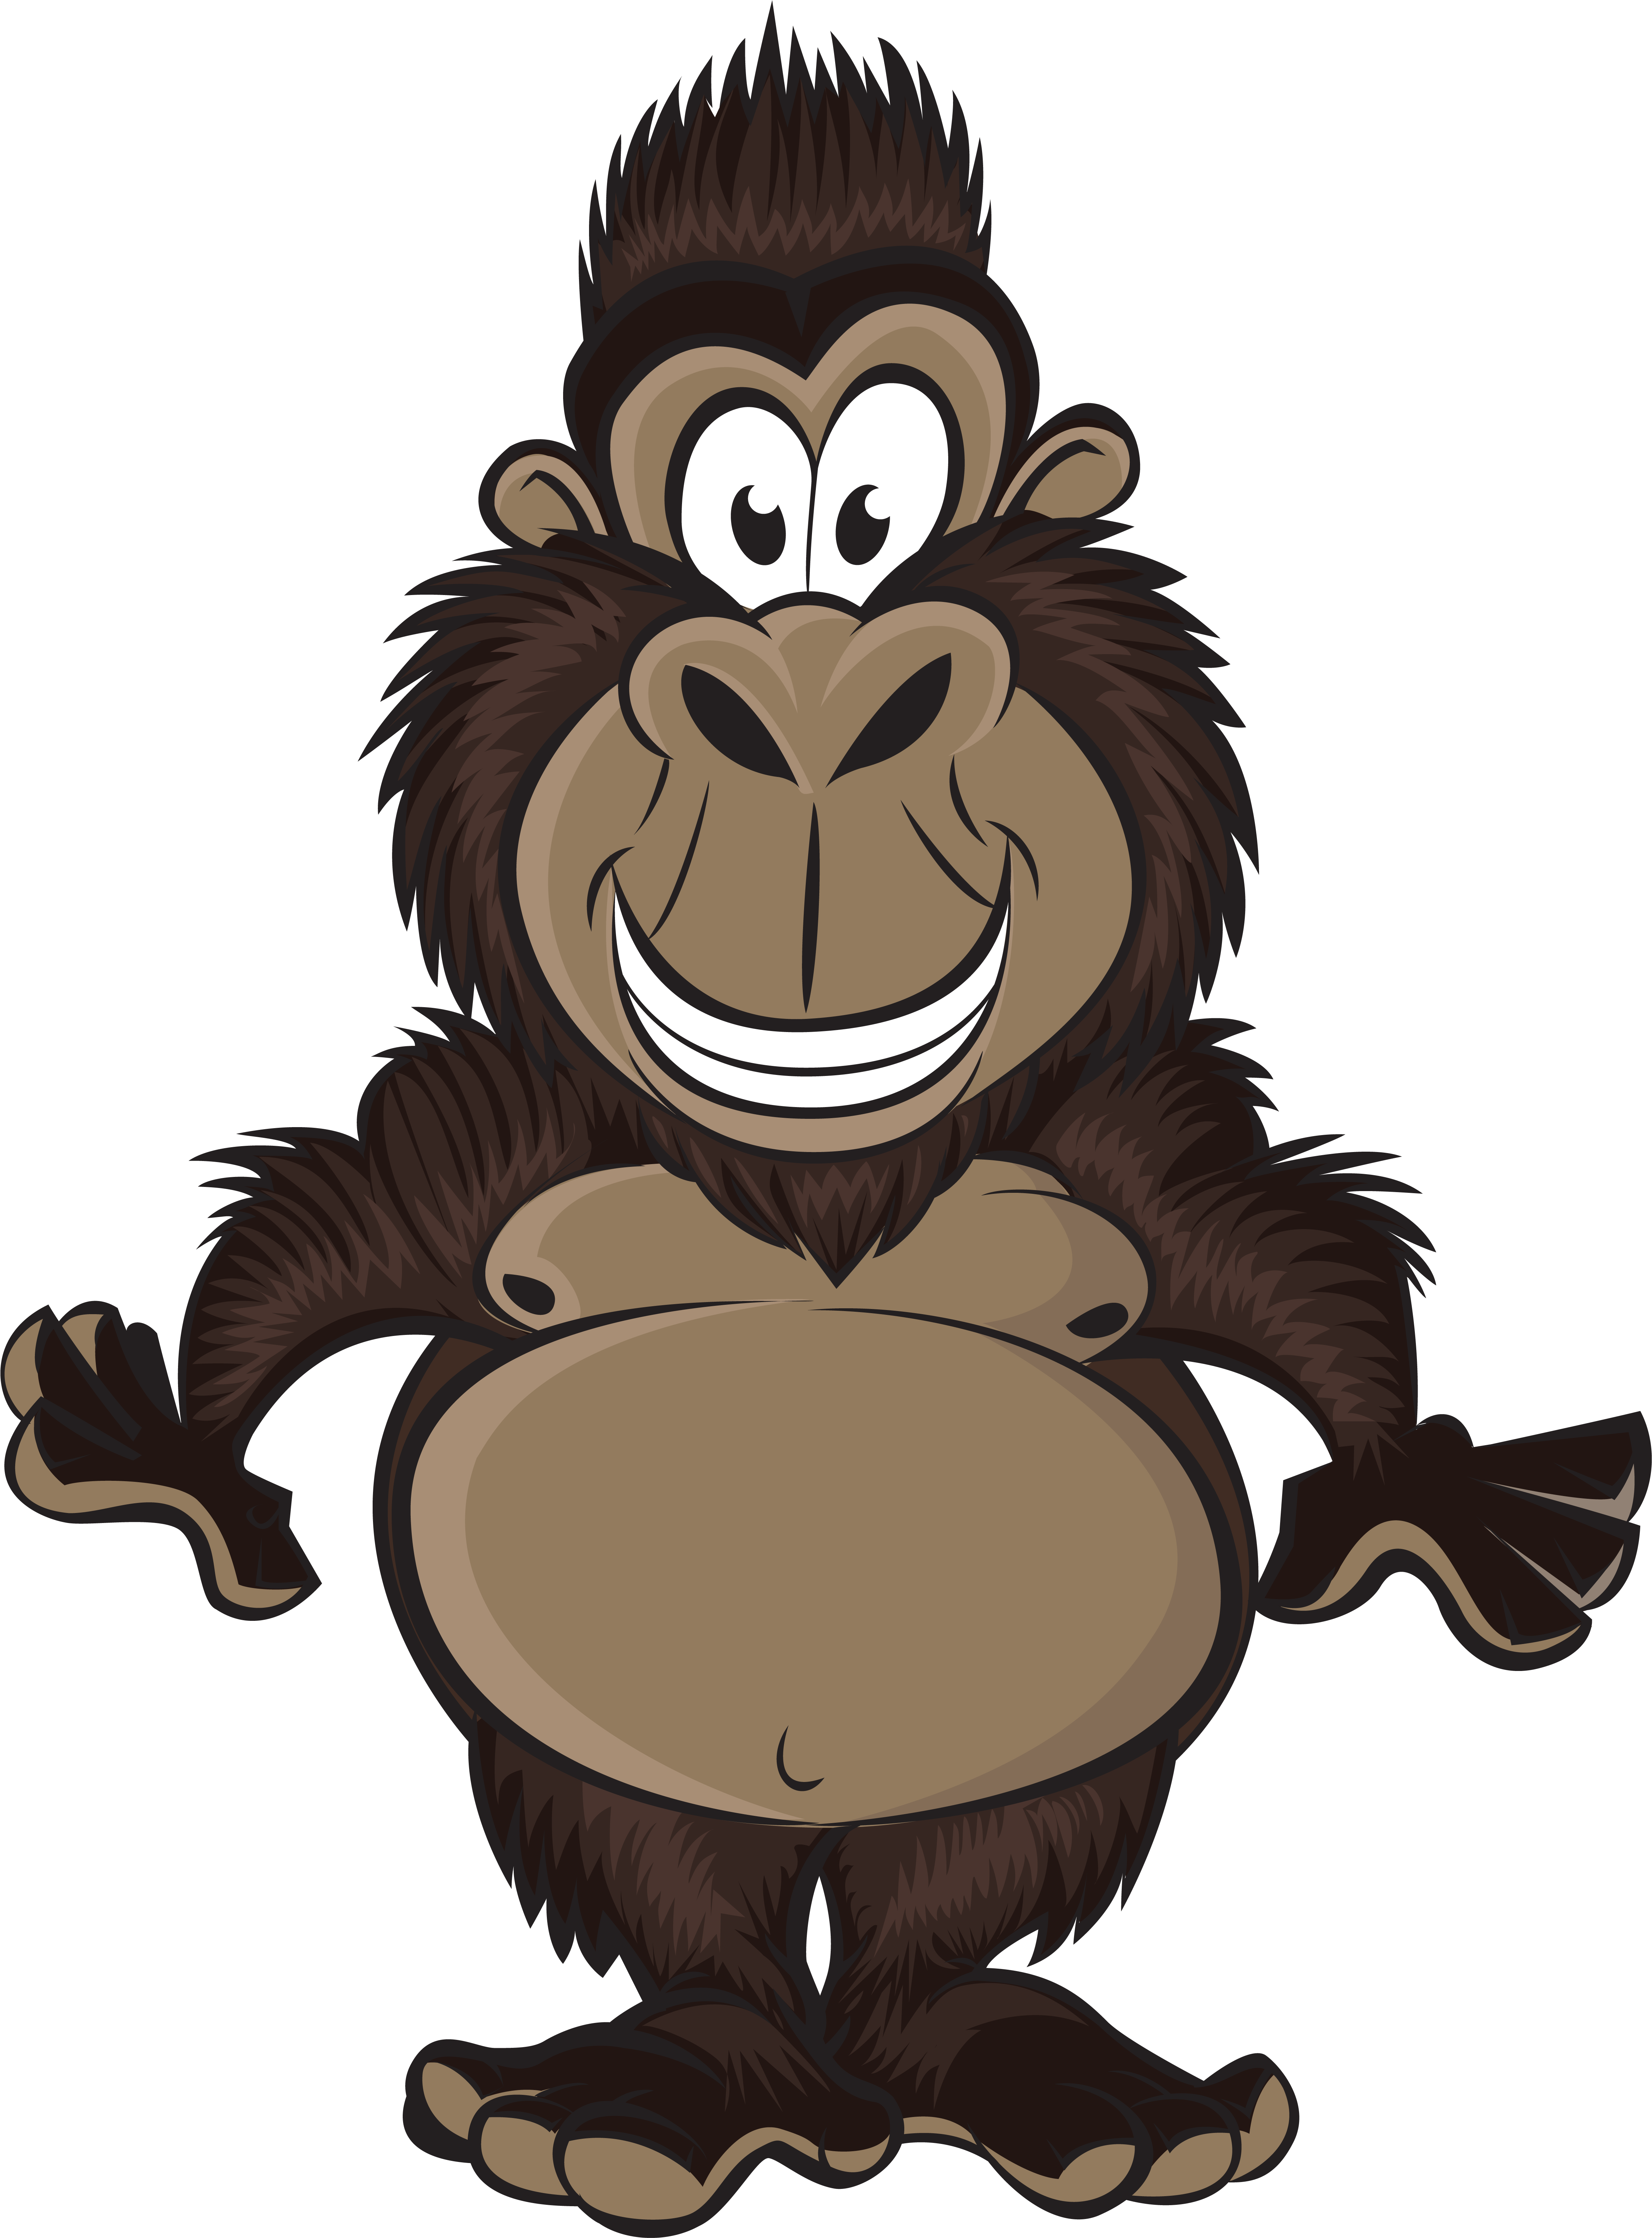 Cartoon Gorilla Smiling.png